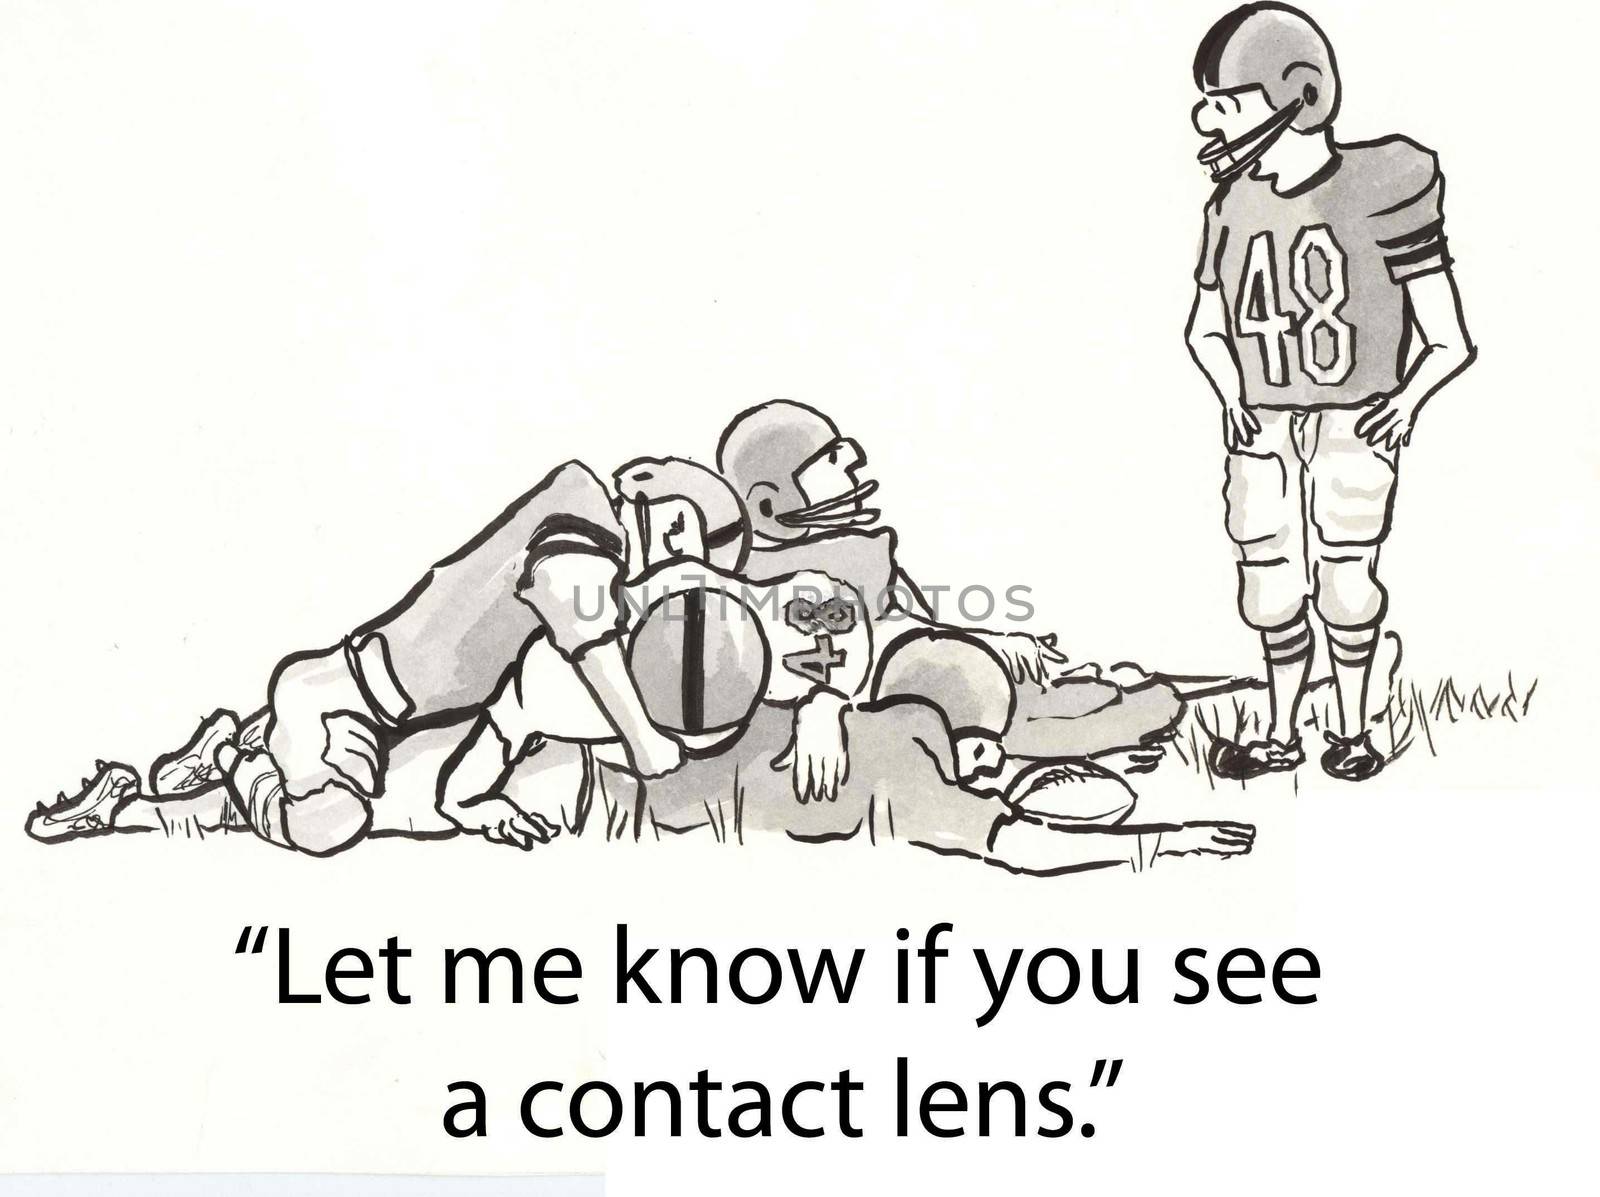 football player looks for lens